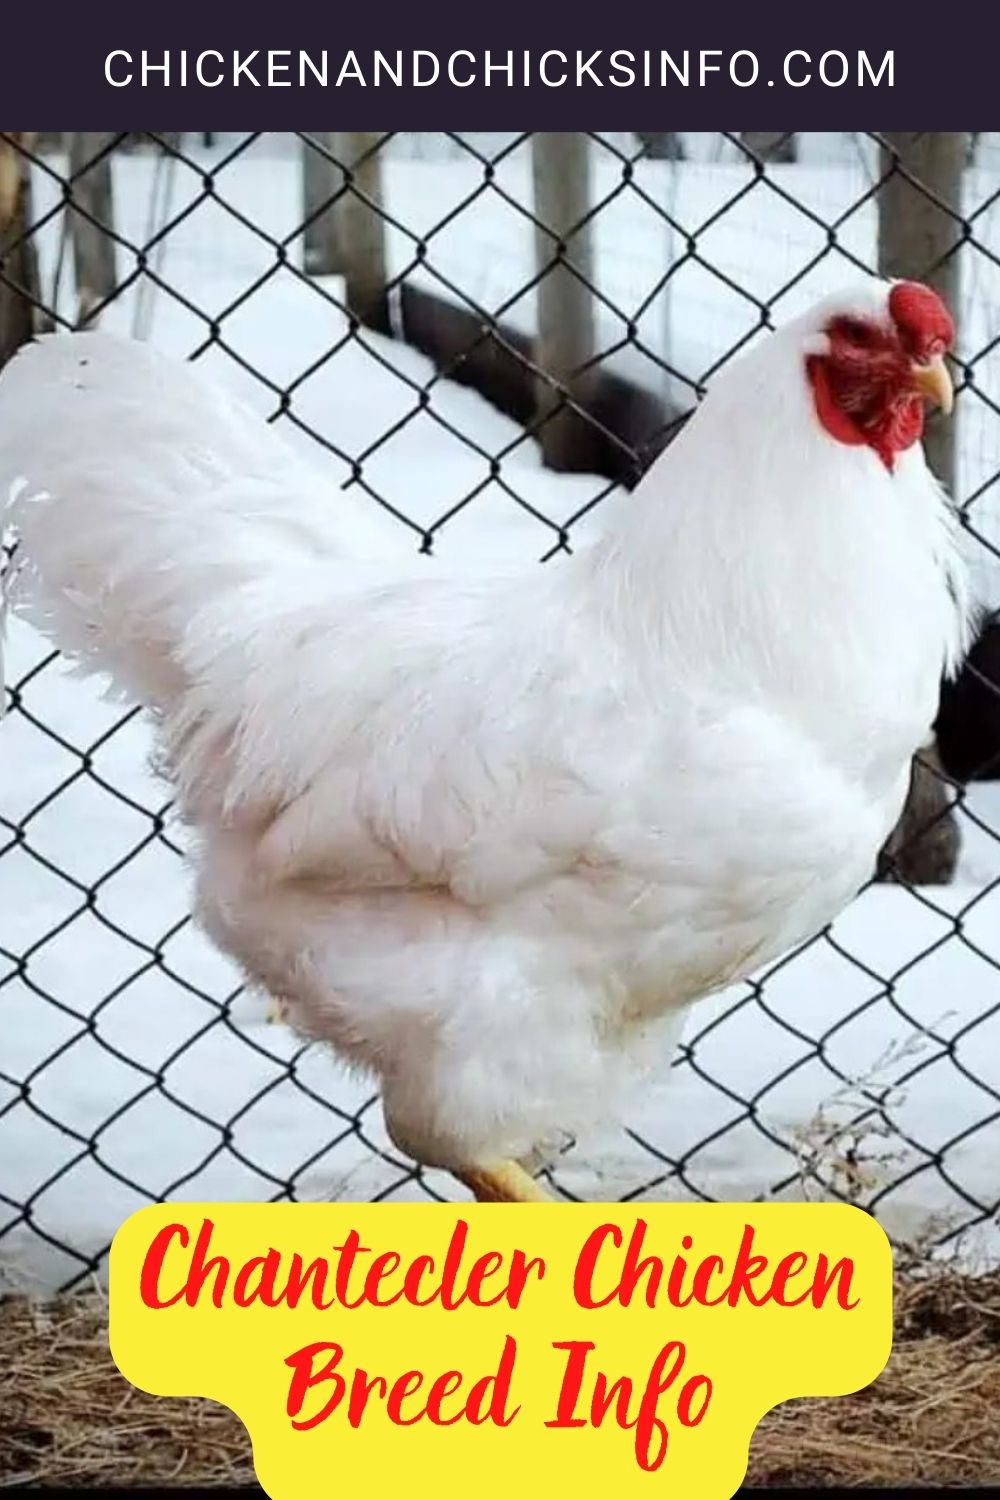 Chantecler Chicken Breed Info pinterest image.